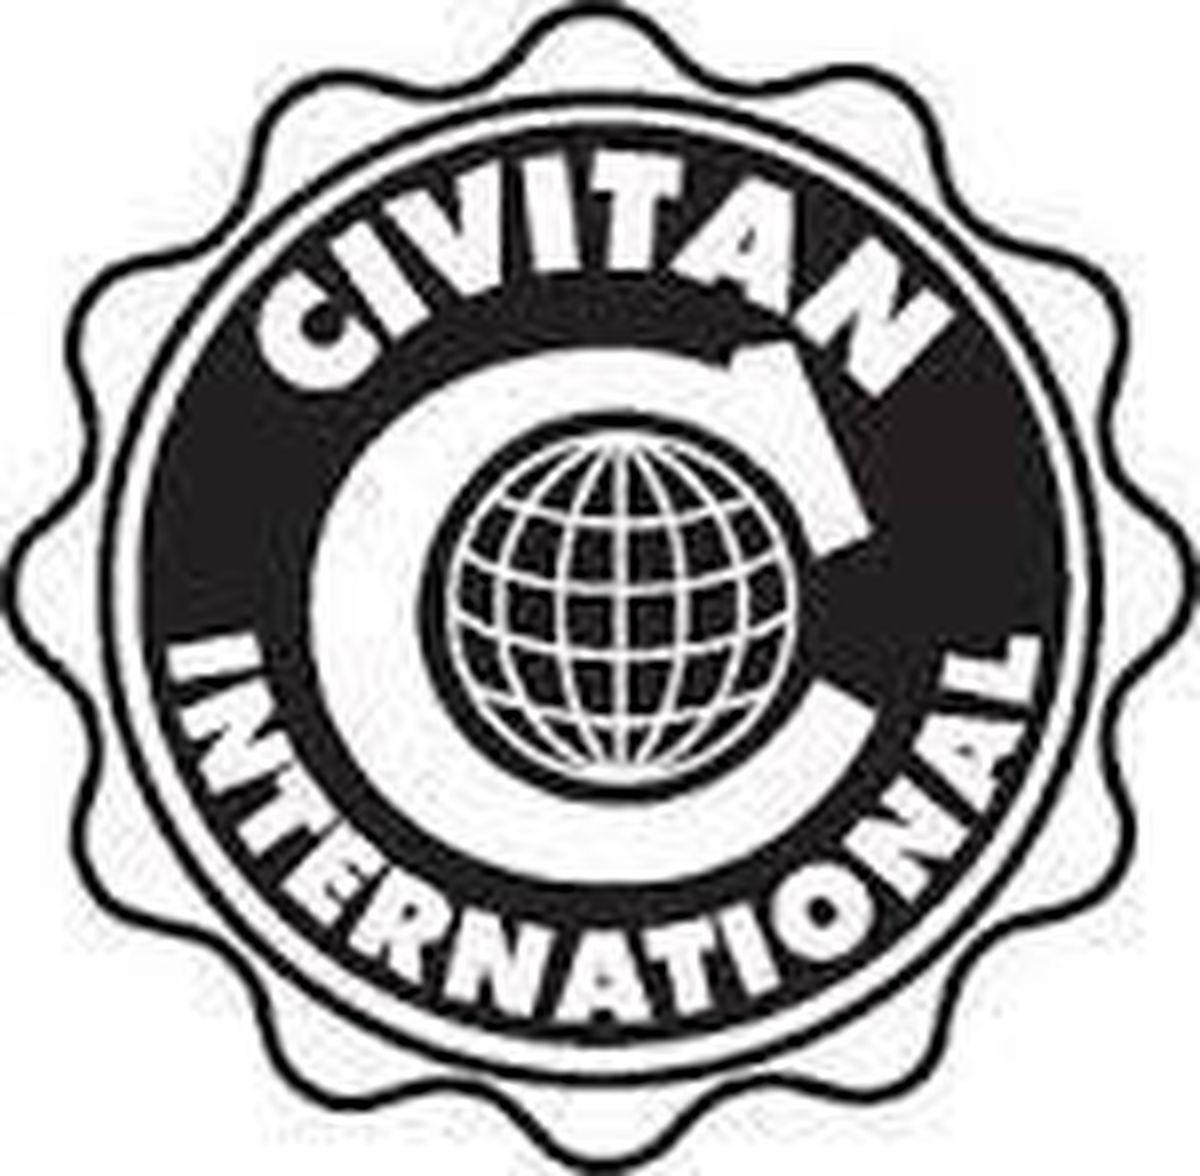 Civitan Logo - Civitan service club making its way to Carroll - Carroll County Times